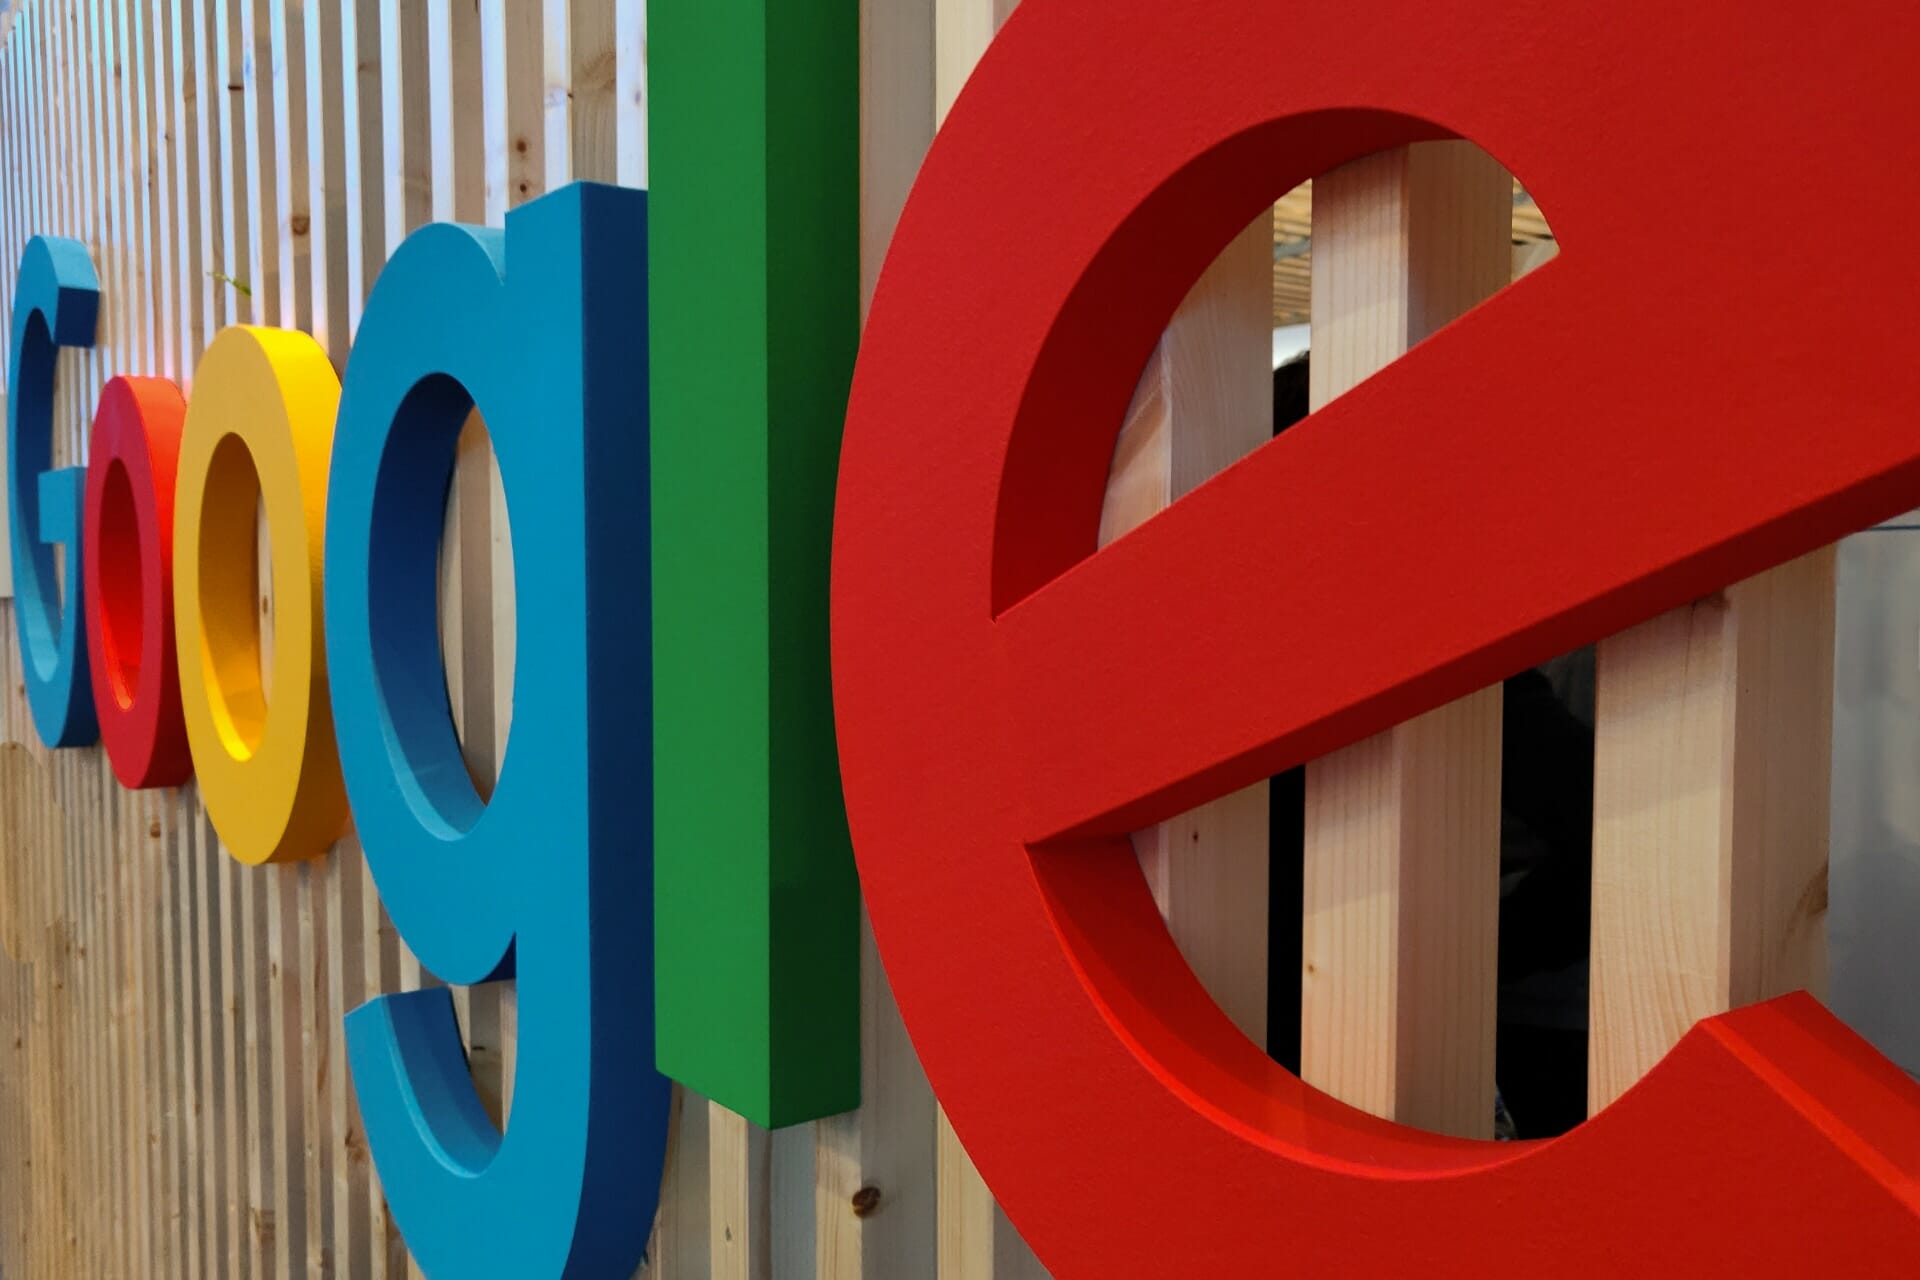 Google I/O conference